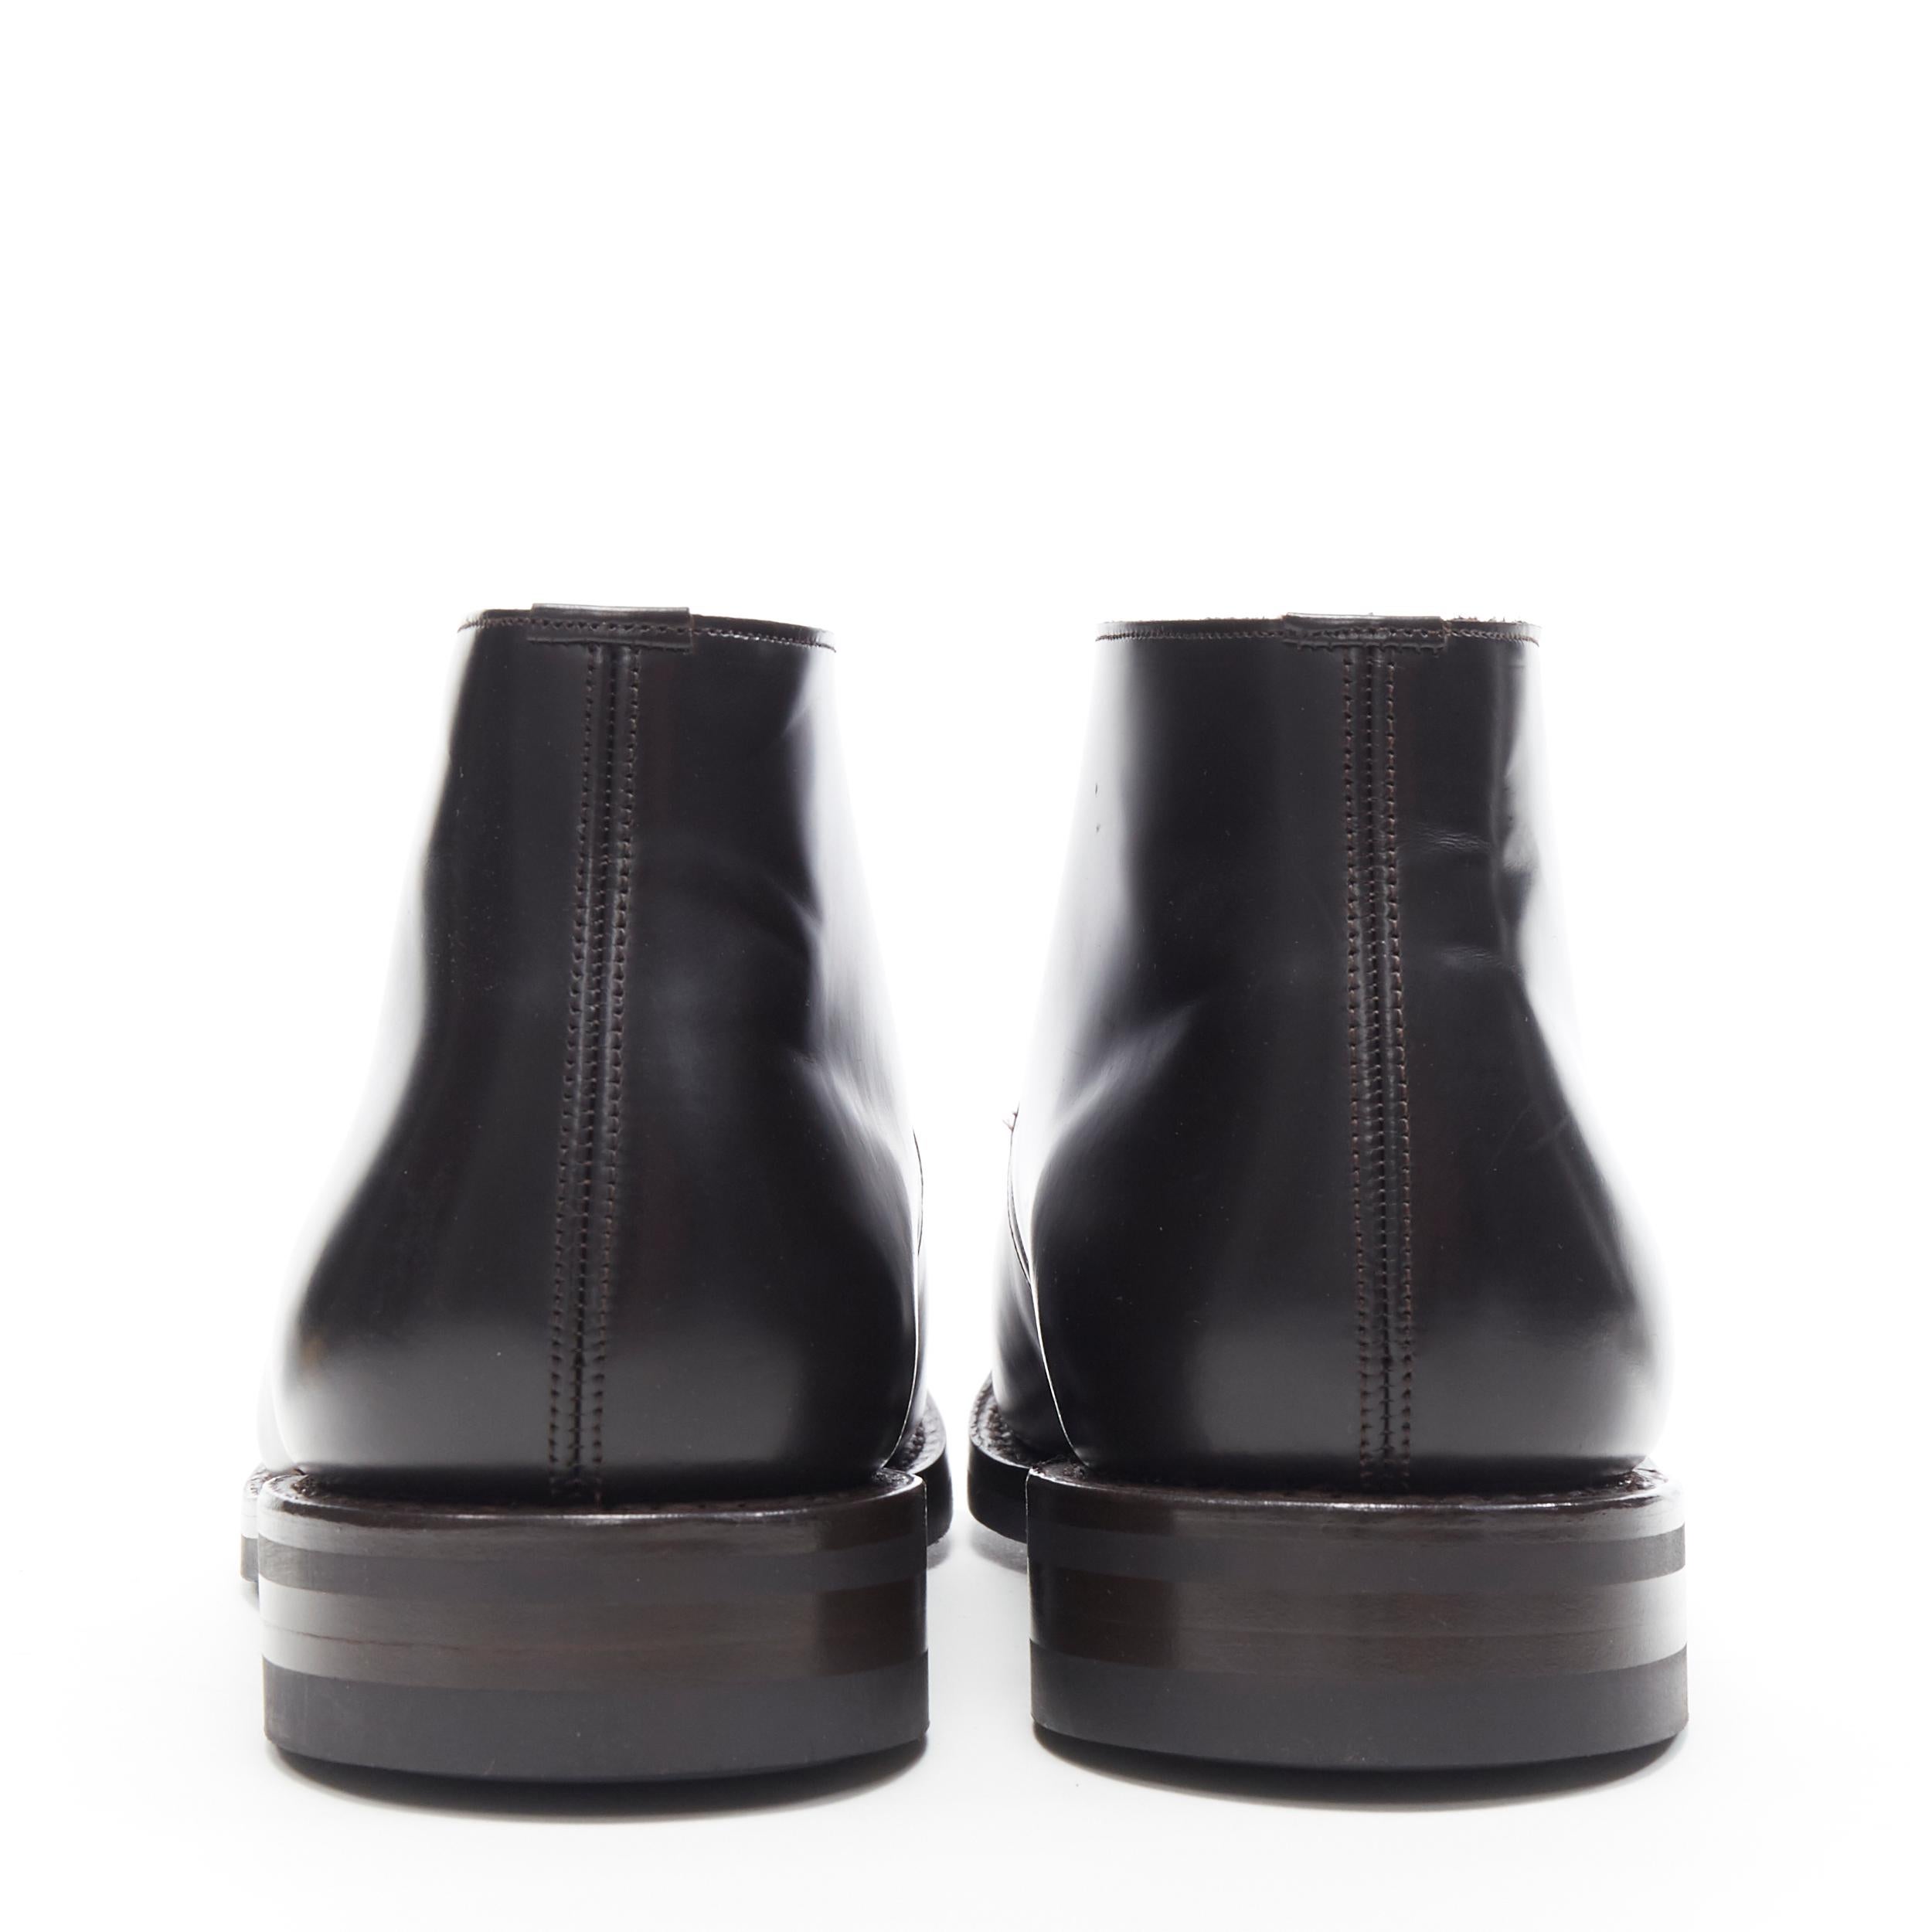 Black new CHURCH'S Ryder 3 Ebony Bright Calf dark brown leather desert boots UK11 EU45